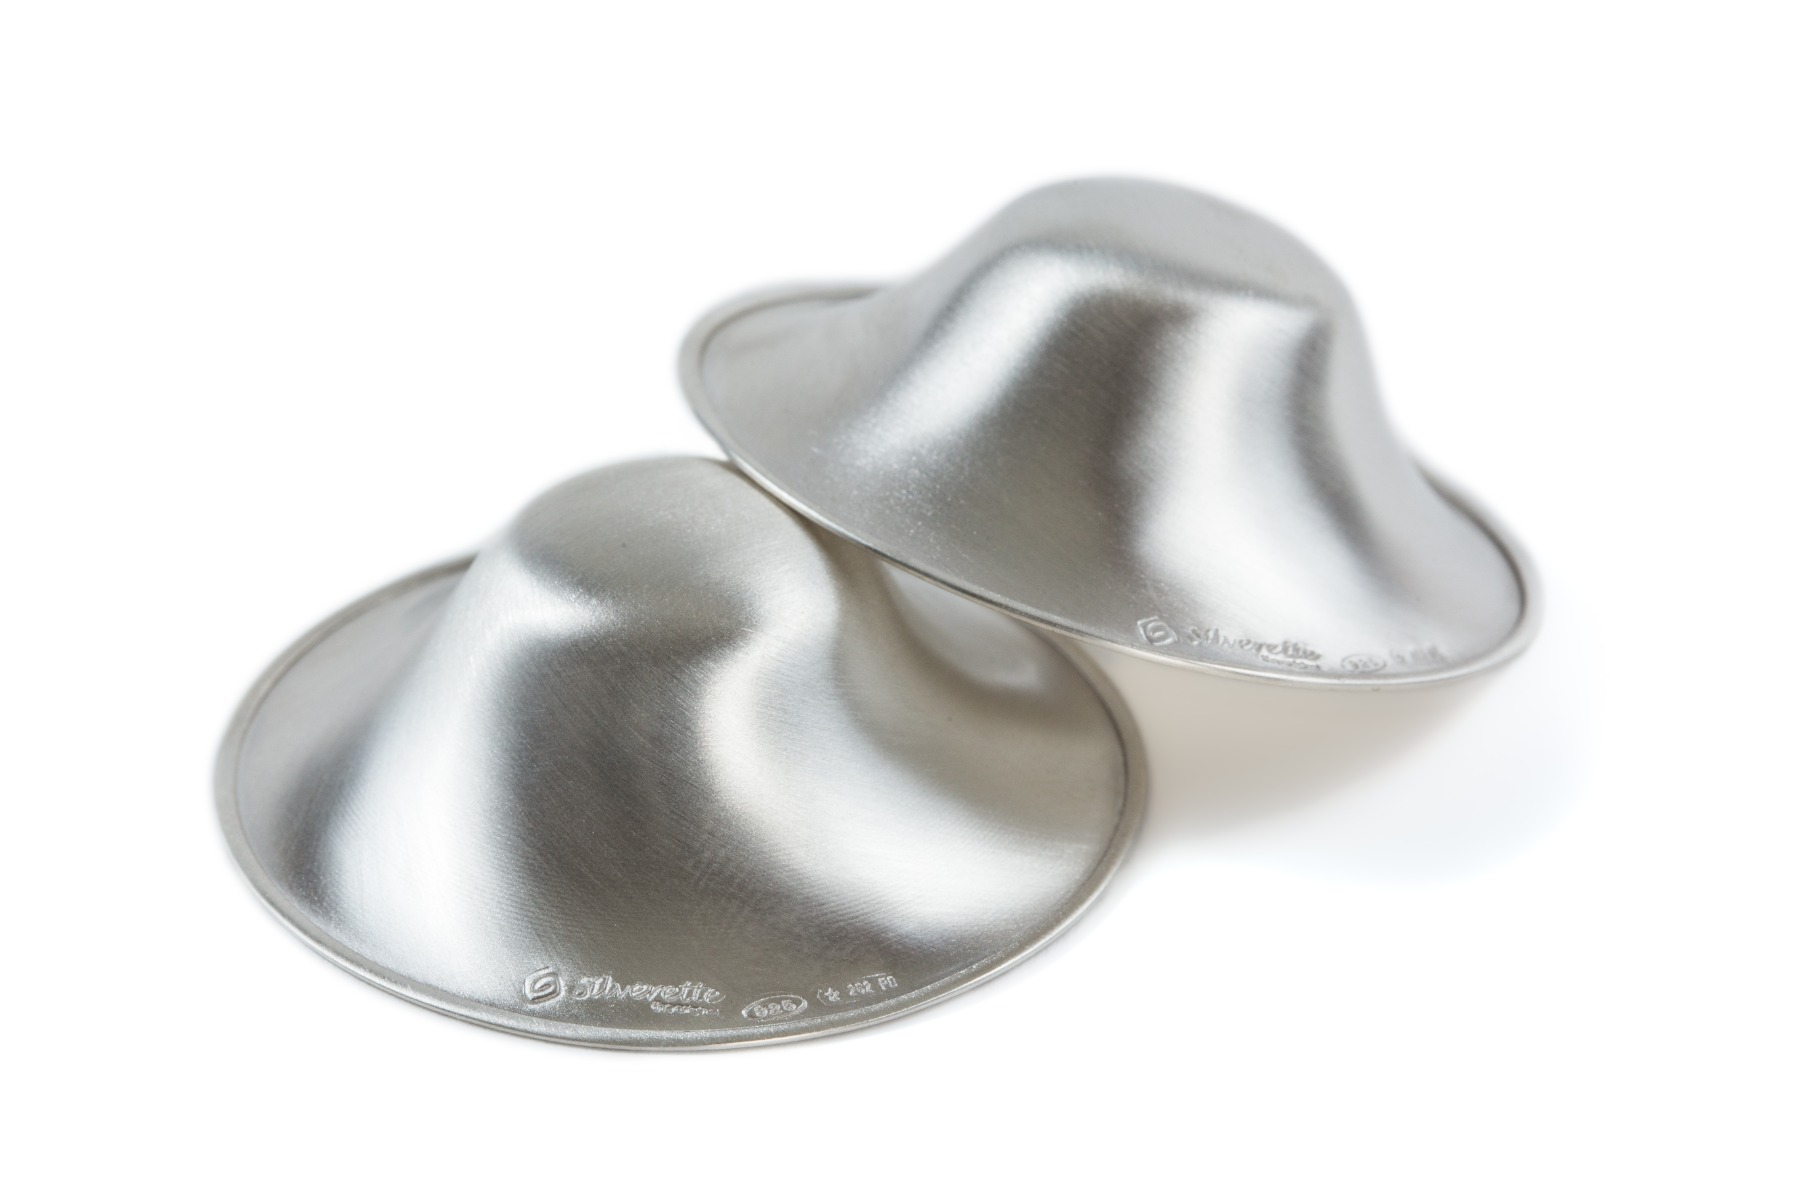 Silverette® Nursing Cups - The Orginal Cup, Pure 925 Silver